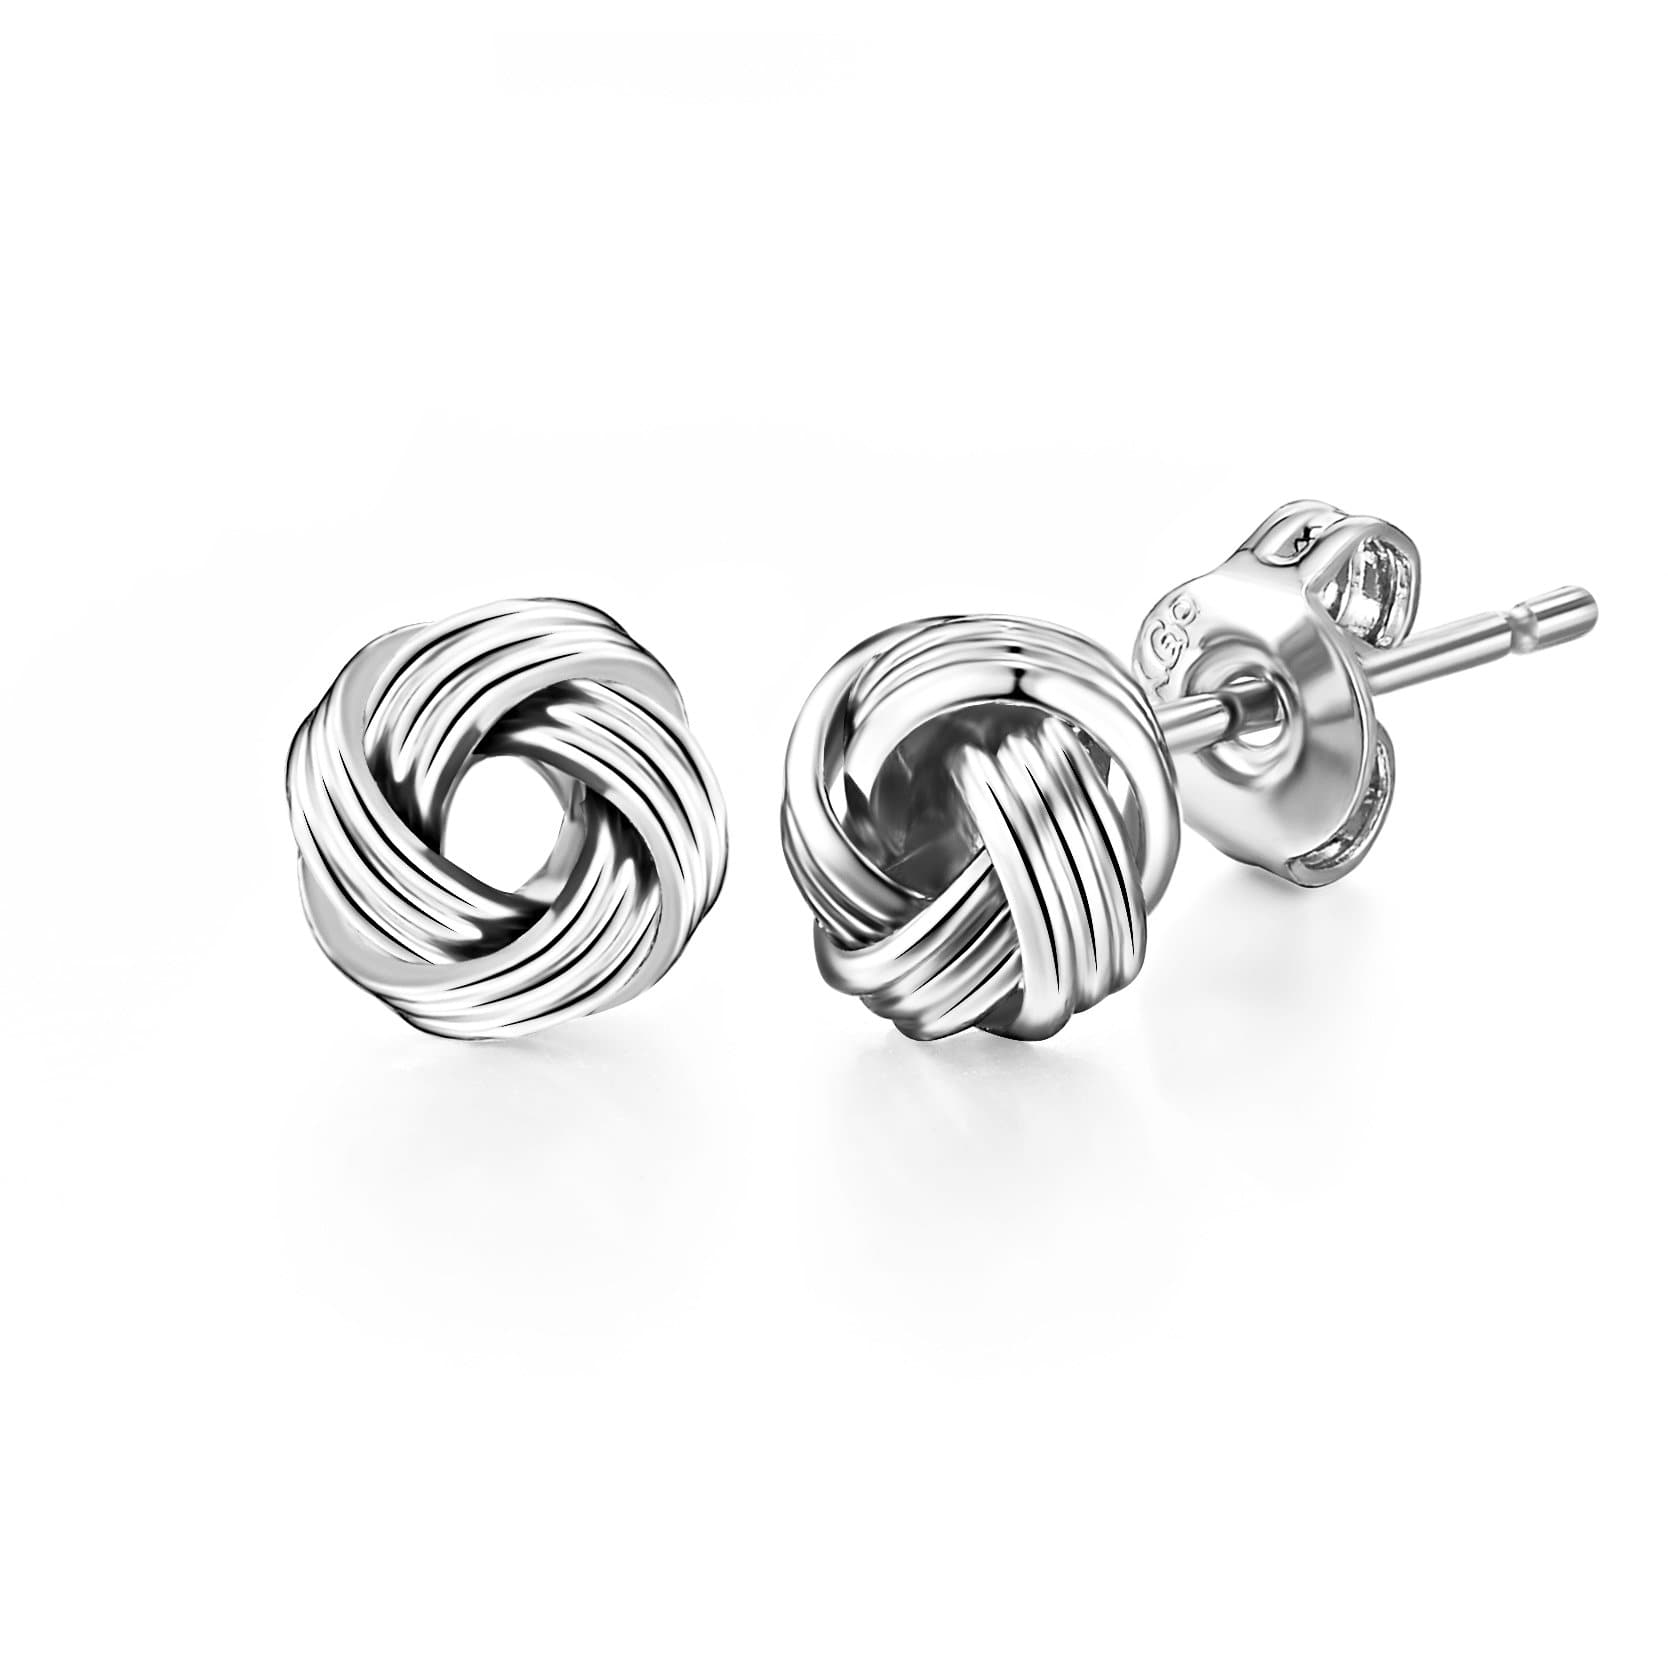 Set of Three Love Knot Earrings